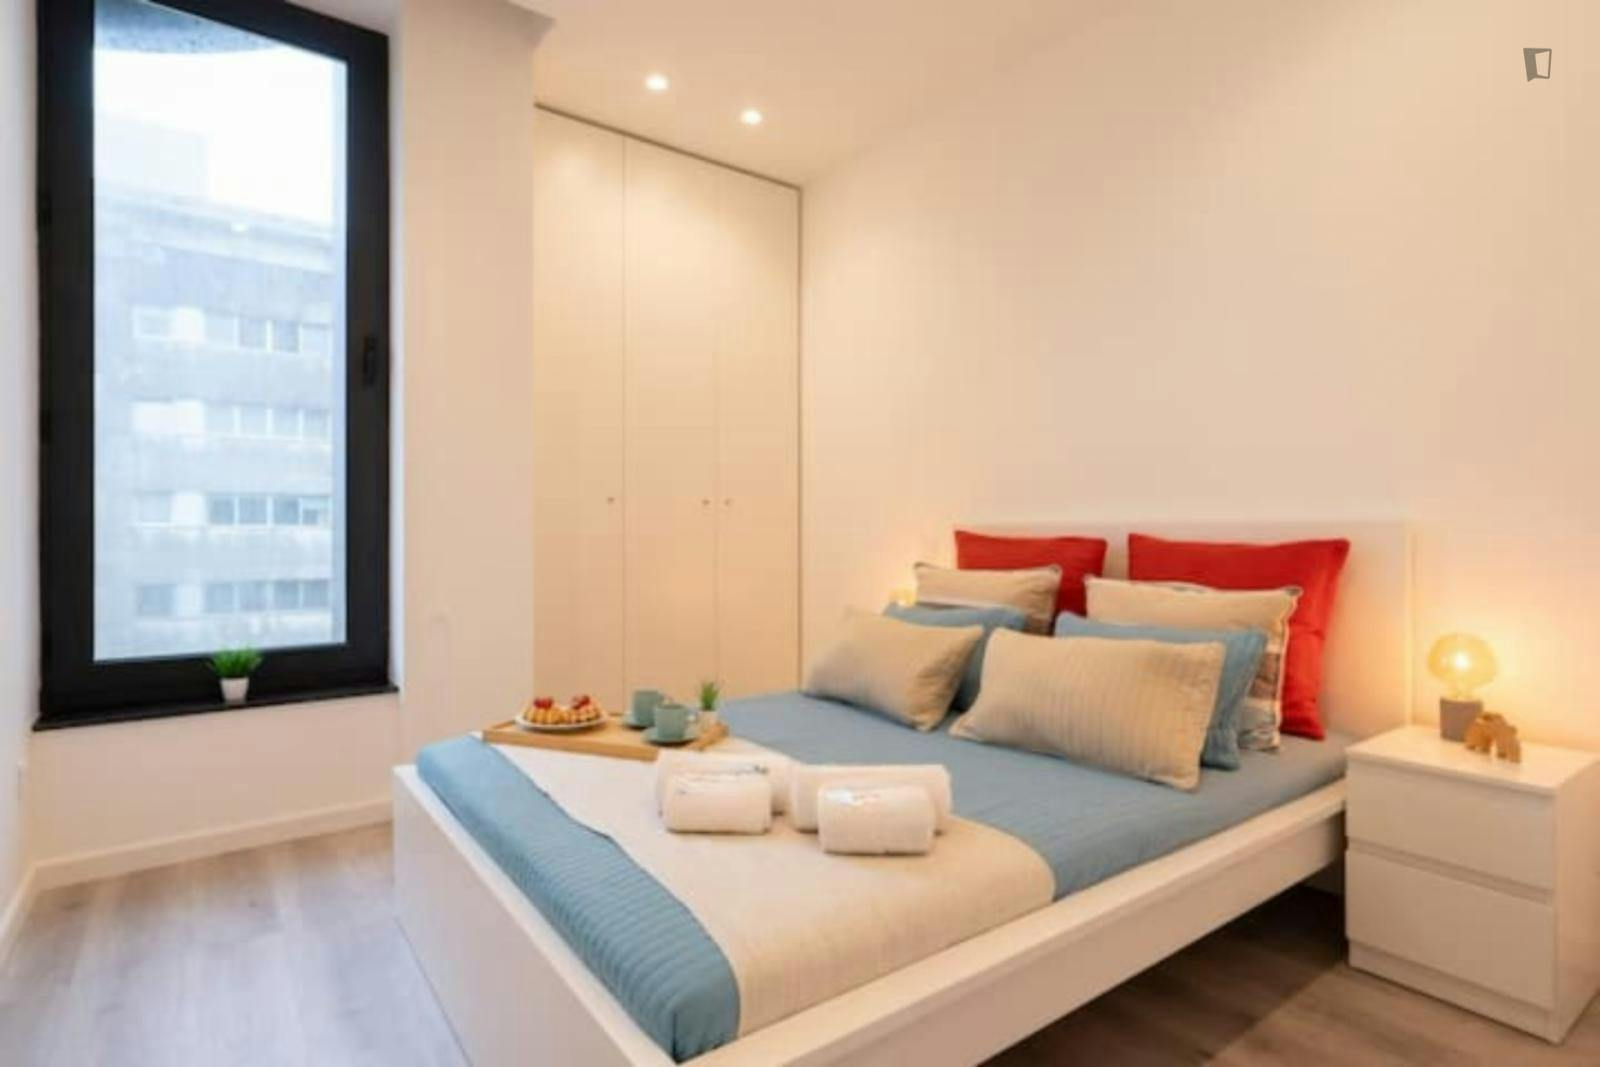 Trendy 1-bedroom apartment near Matosinhos Sul metro station